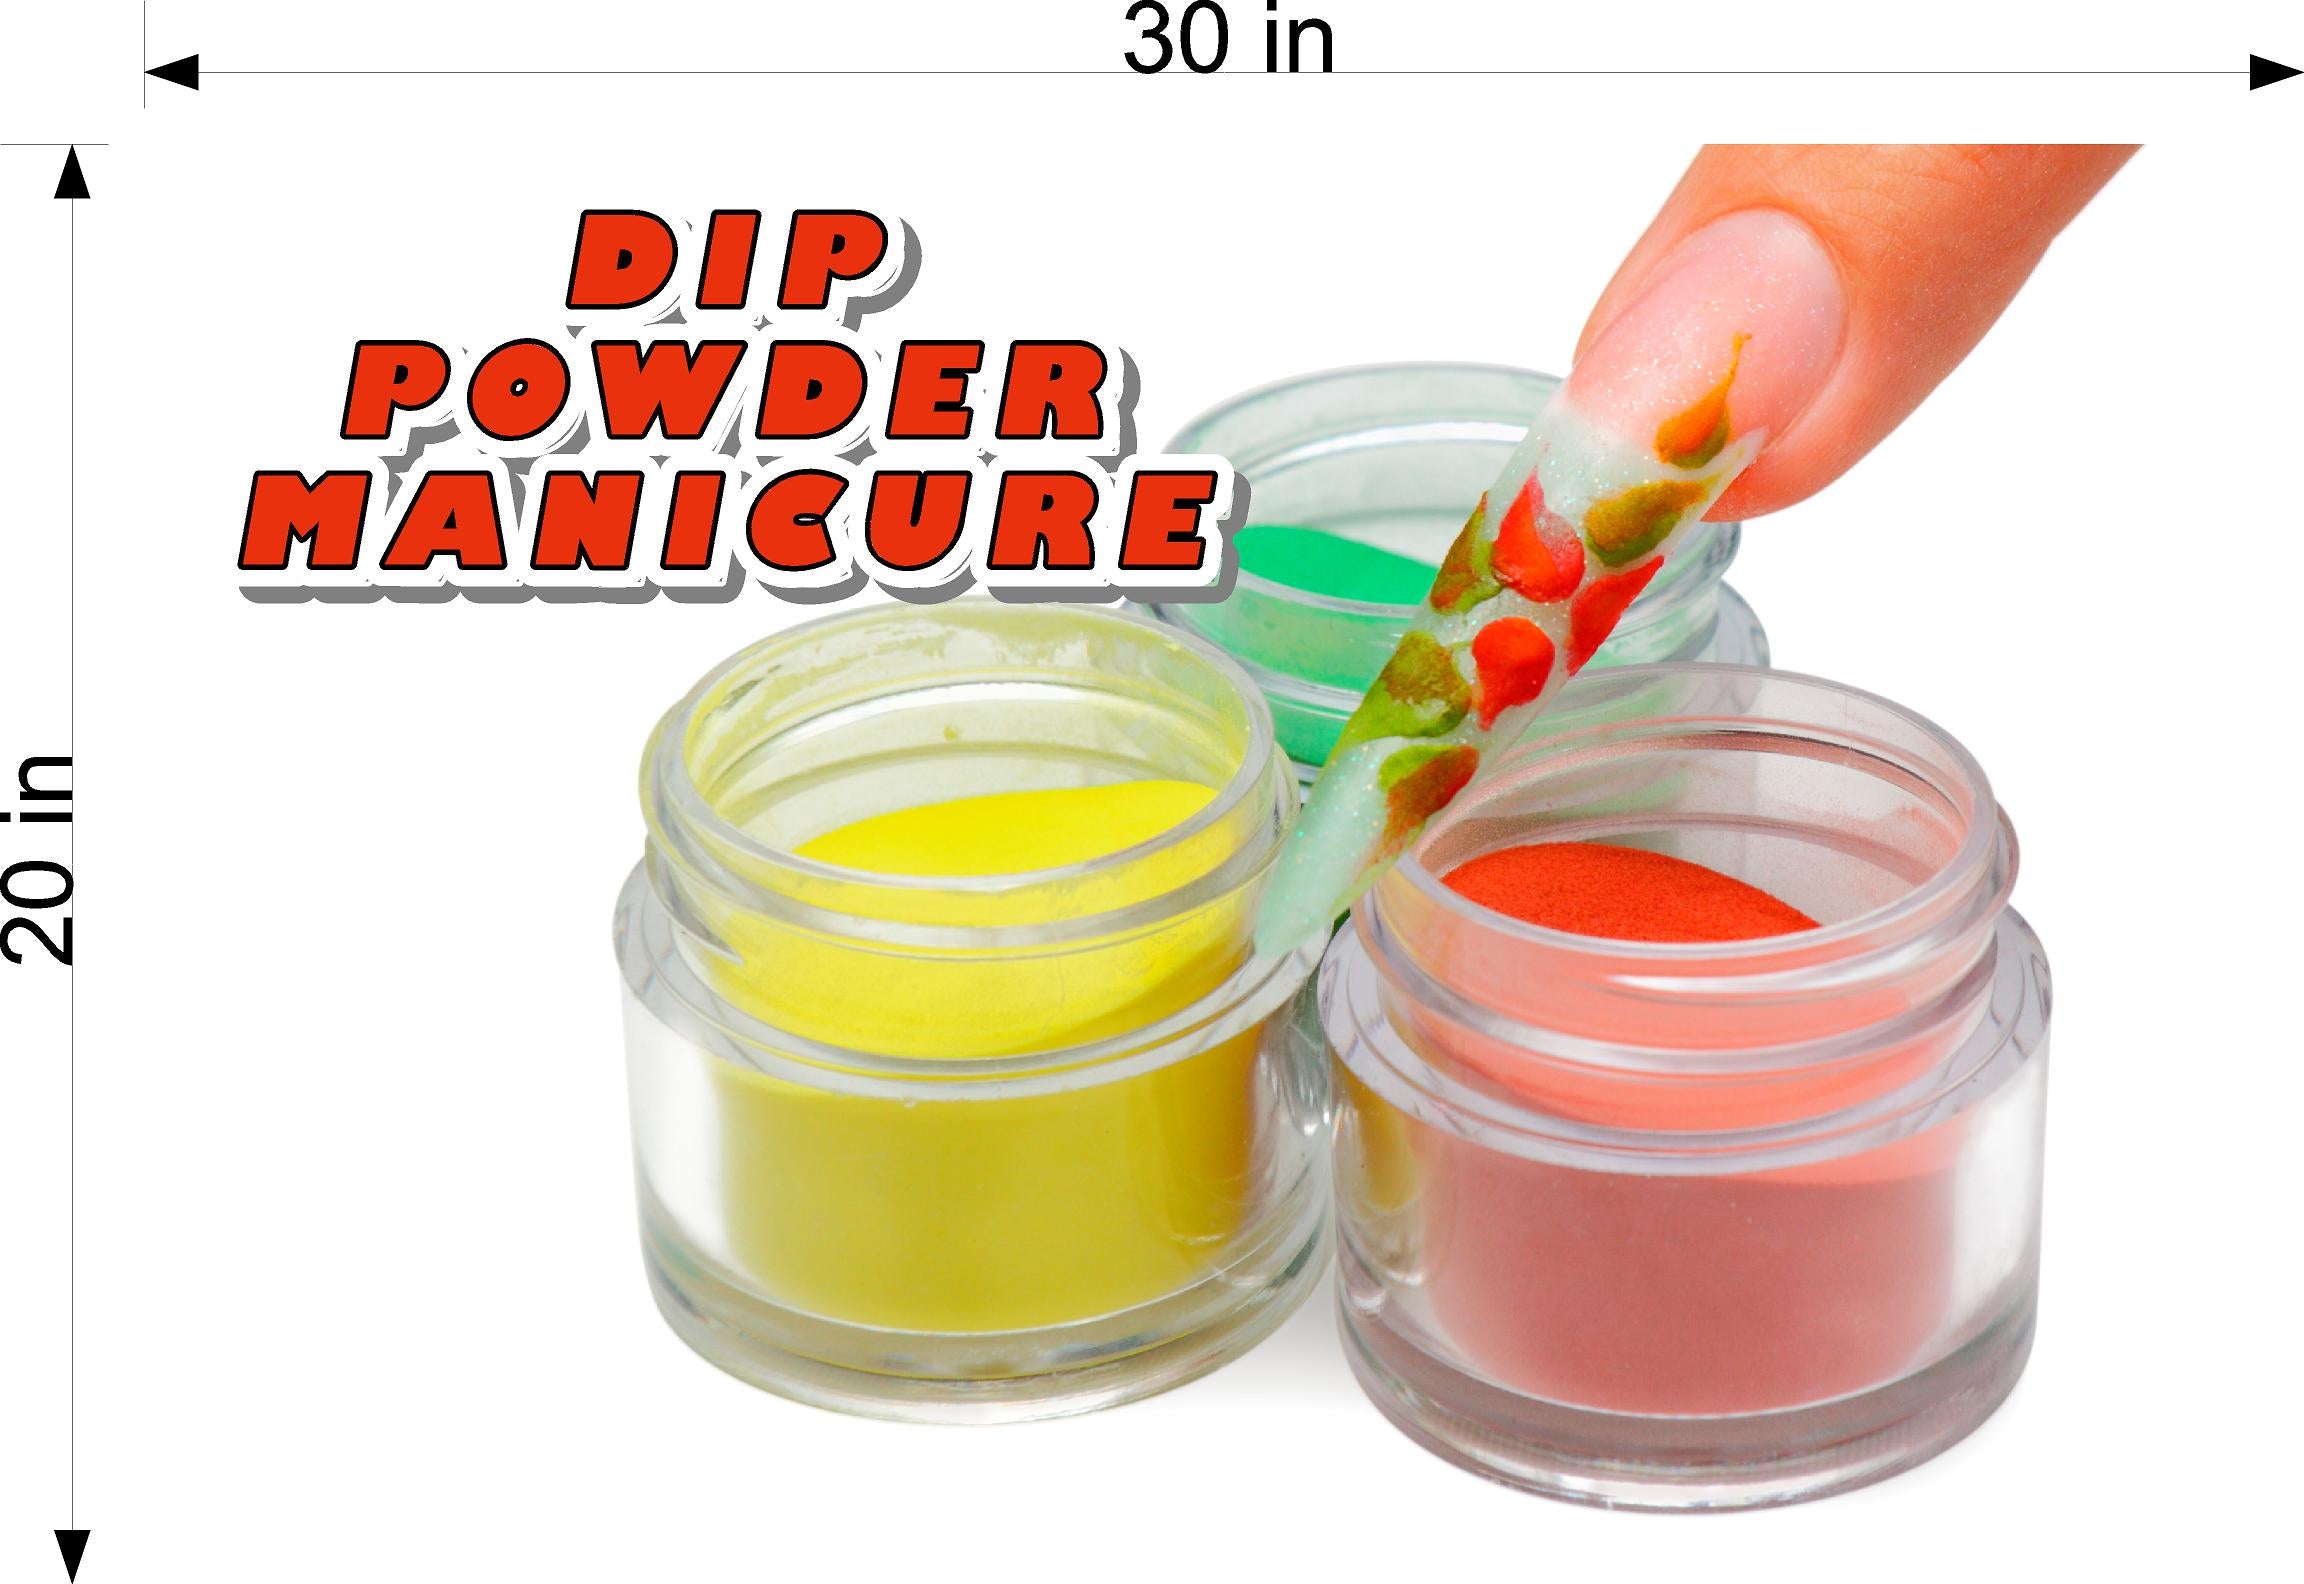 Dip Powder 07 Wallpaper Poster Decal with Adhesive Backing Wall Sticker Decor Nail Salon Sign Horizontal